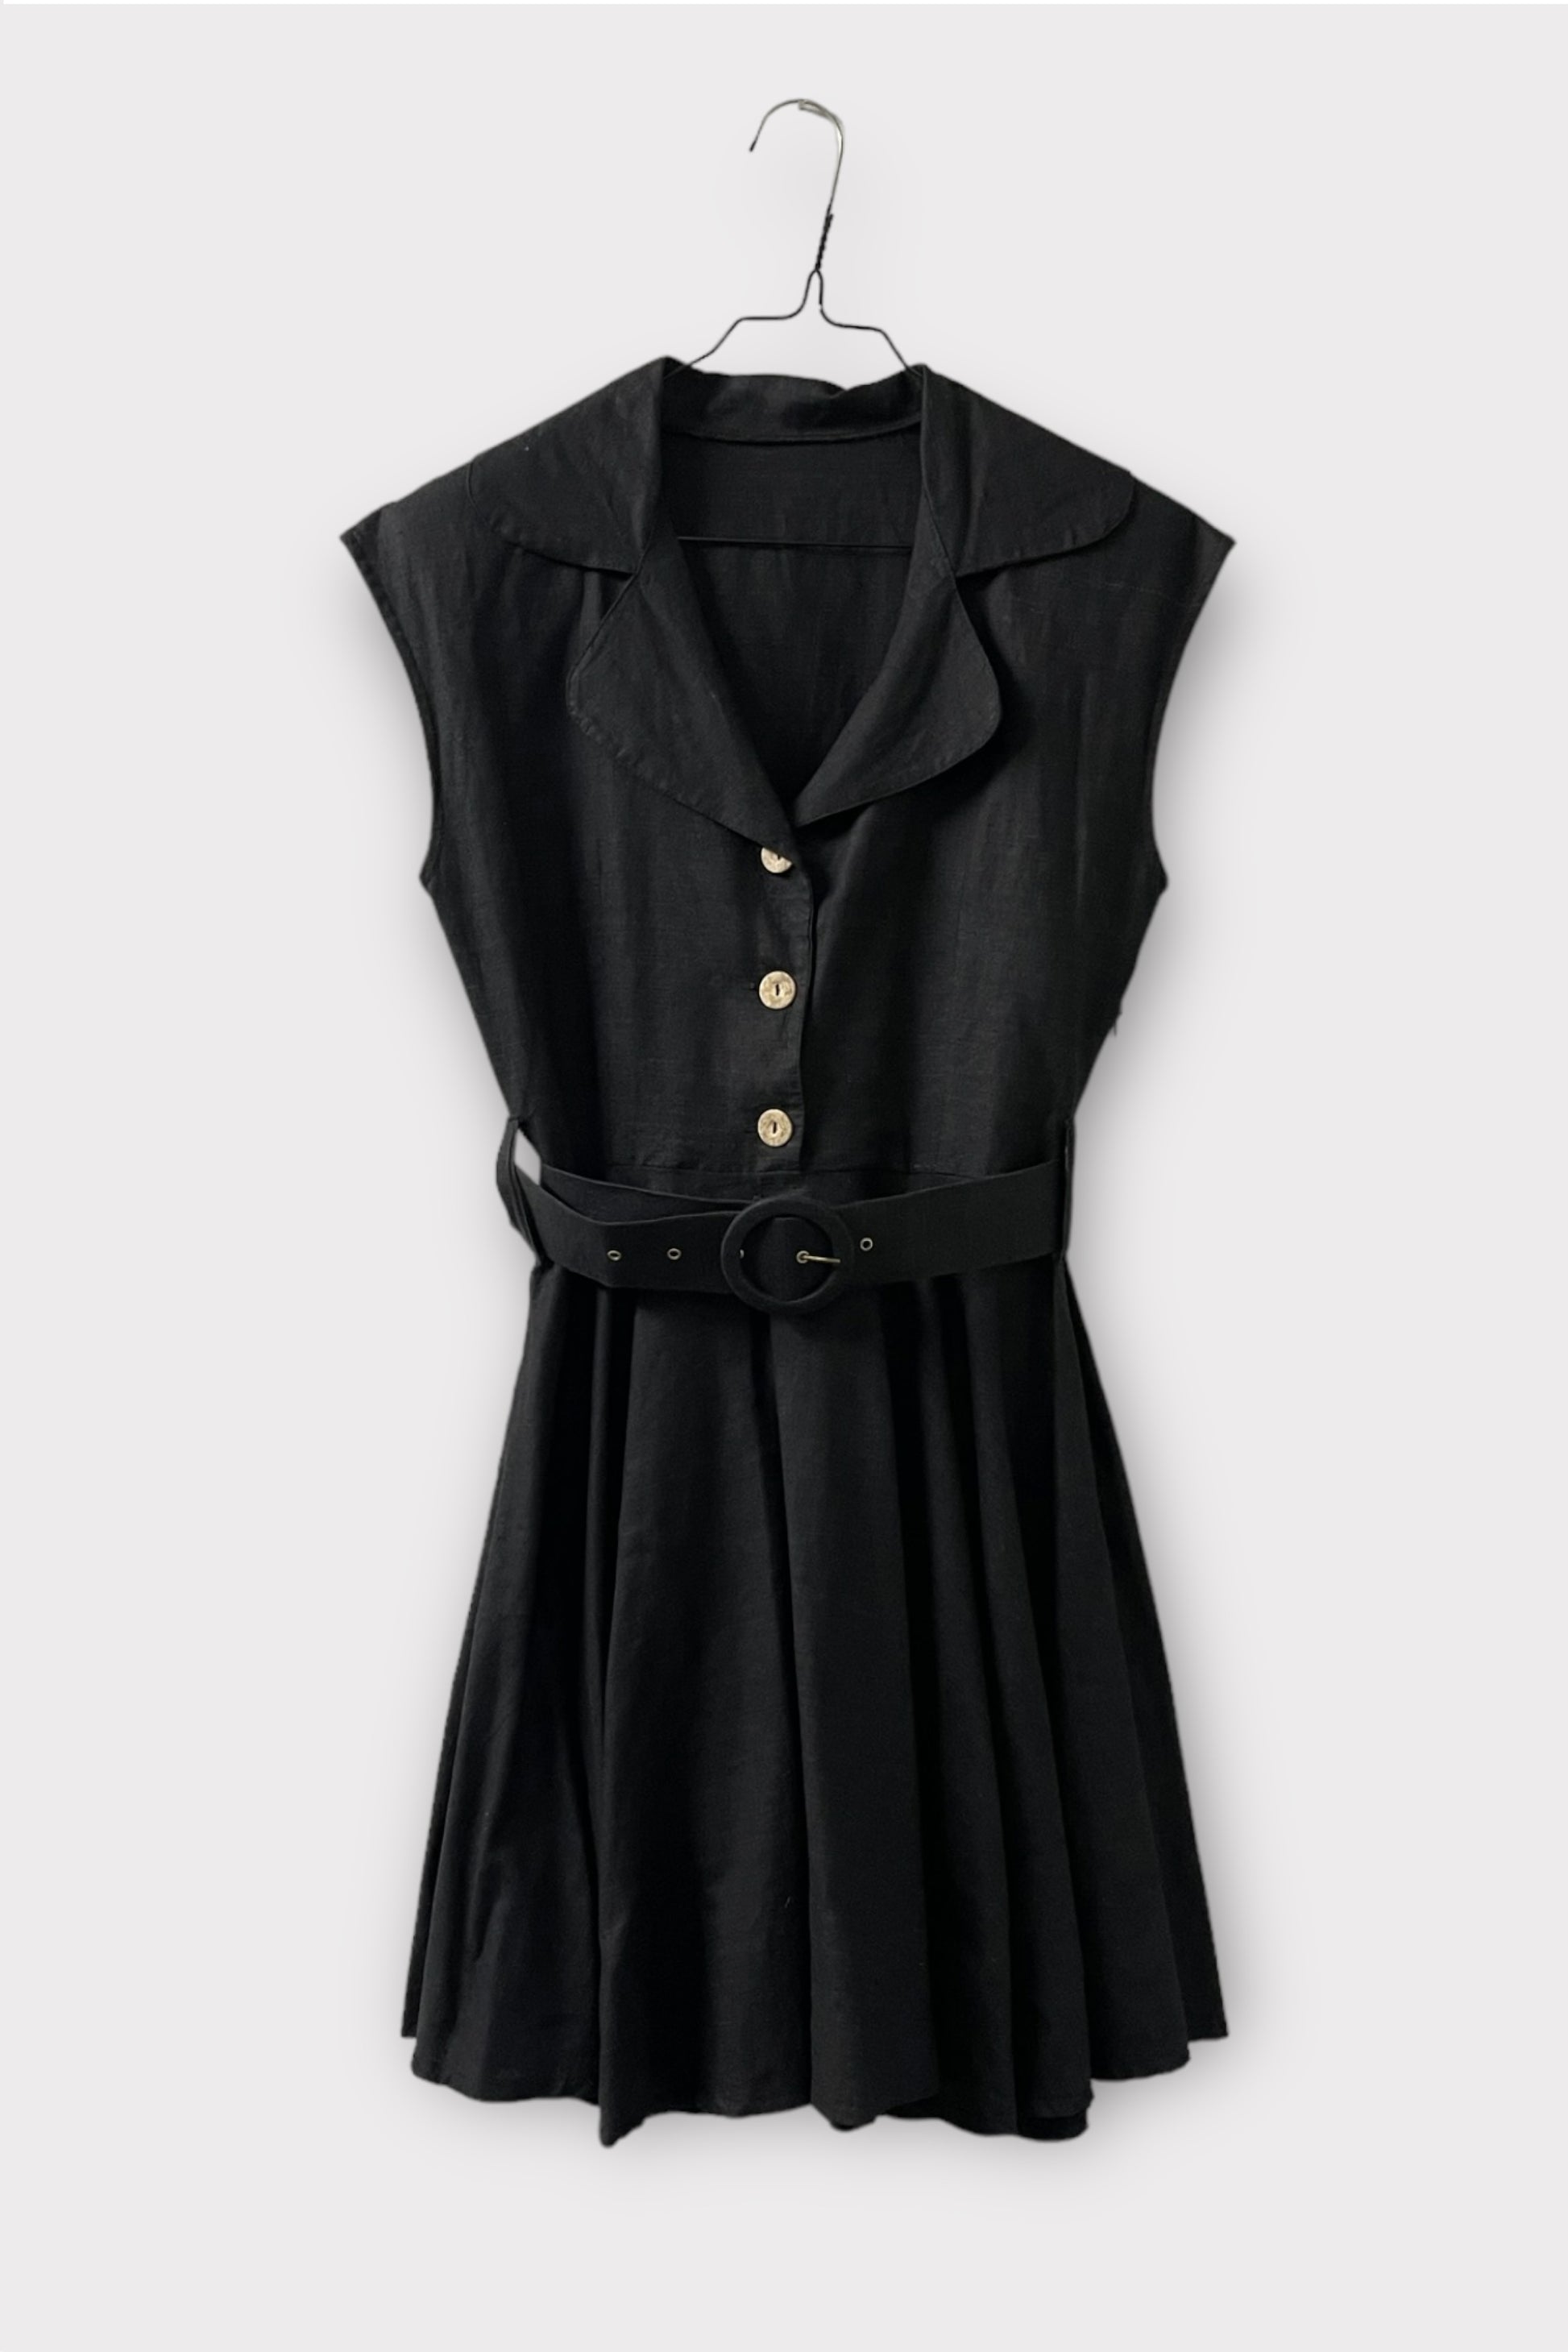 zwarte vintage jurk met aansluitende body en cirkel rok.